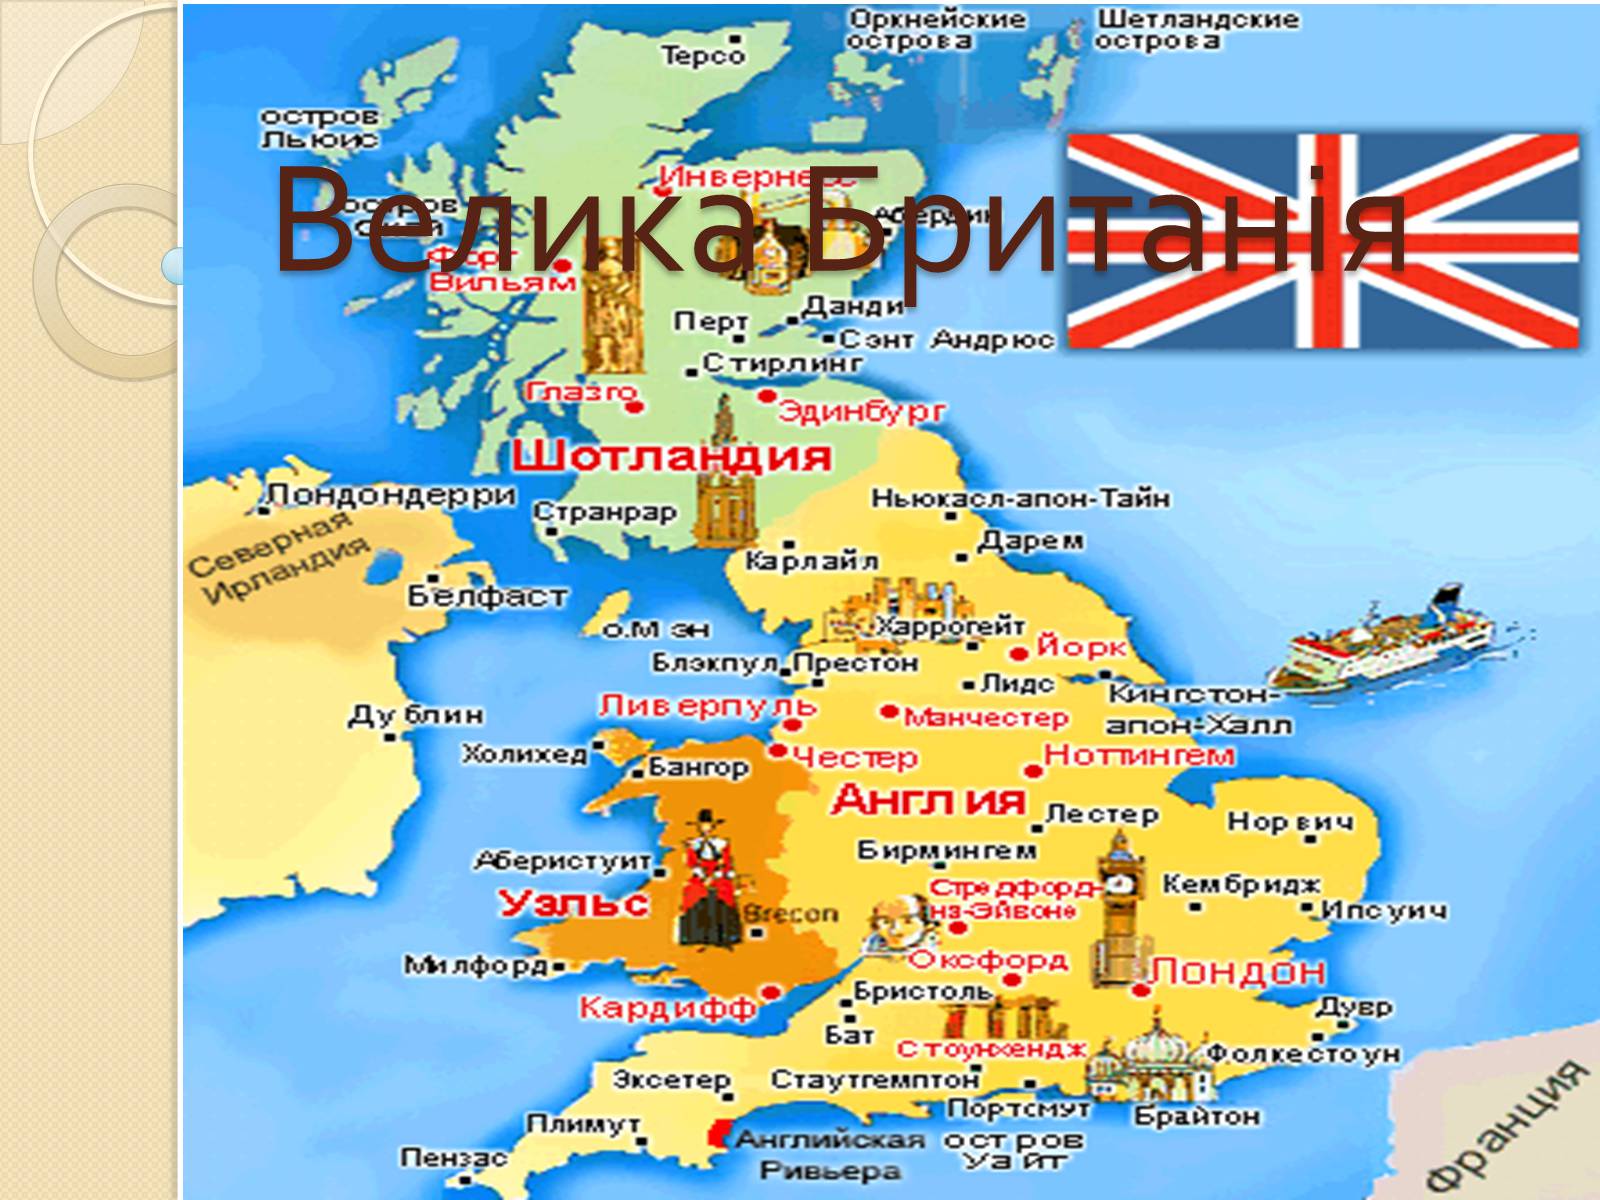 Покажи страну великобританию. Англия 18 век карта. Великобритания в конце 19 века карта. Карта Англии и Великобритании. Карта Англии 19 века.